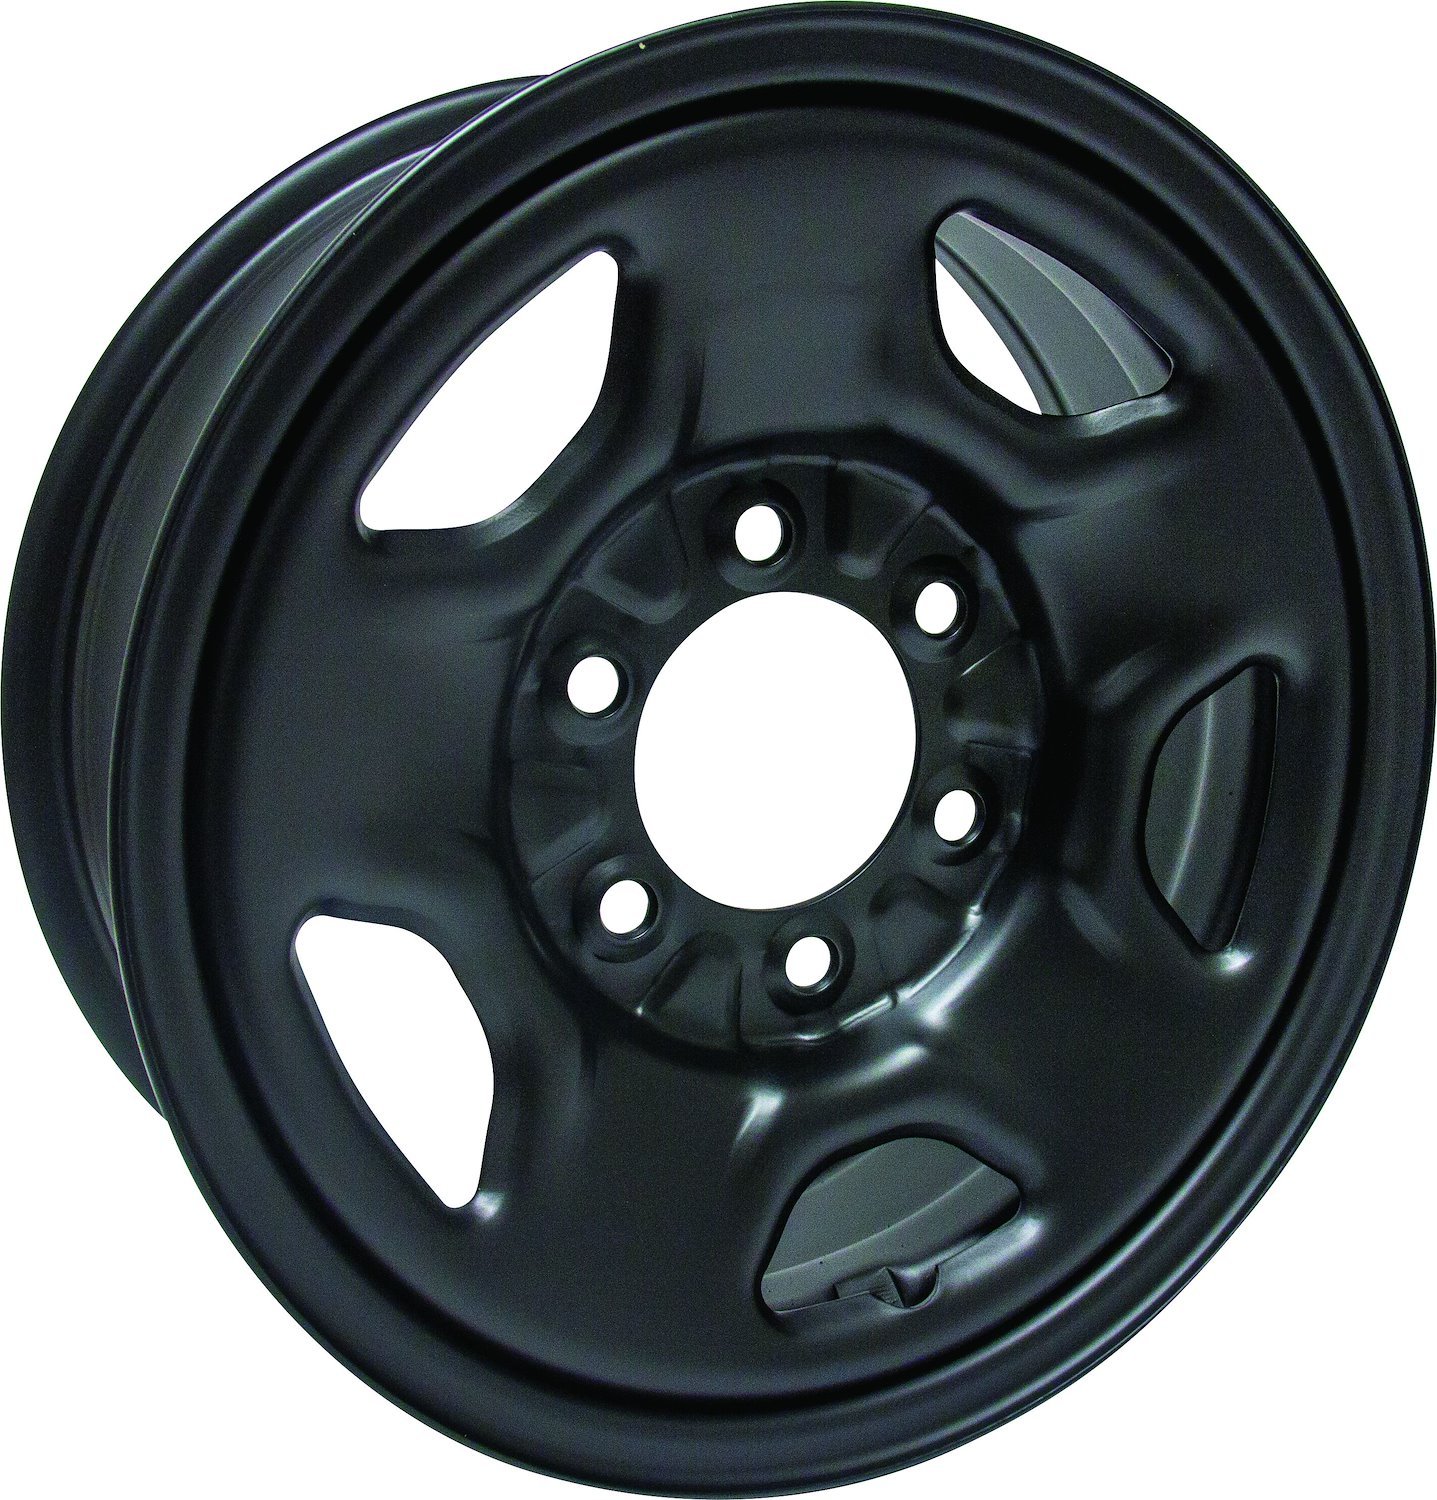 X46139 Steel Wheel [Size: 16" x 6.50"] Black Finish